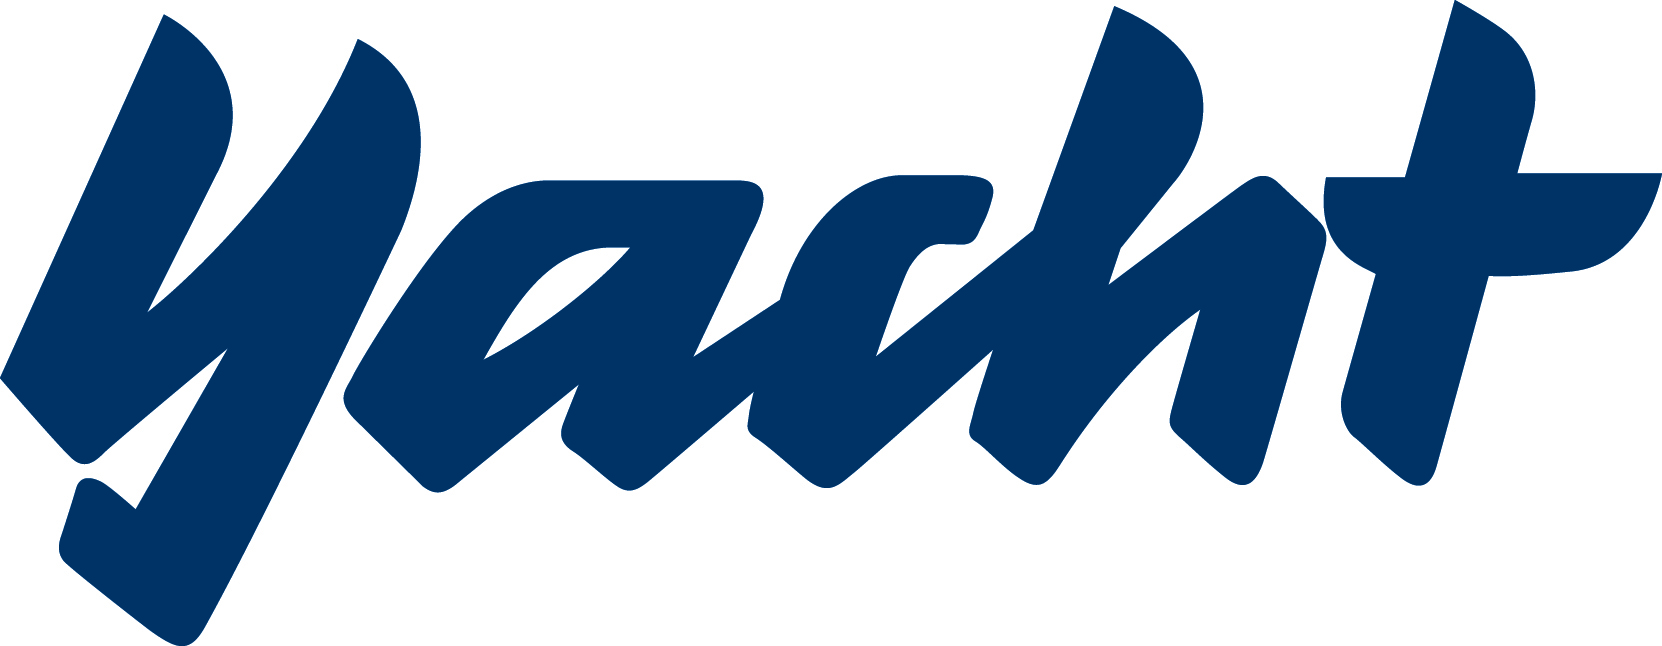 YACHT Logo